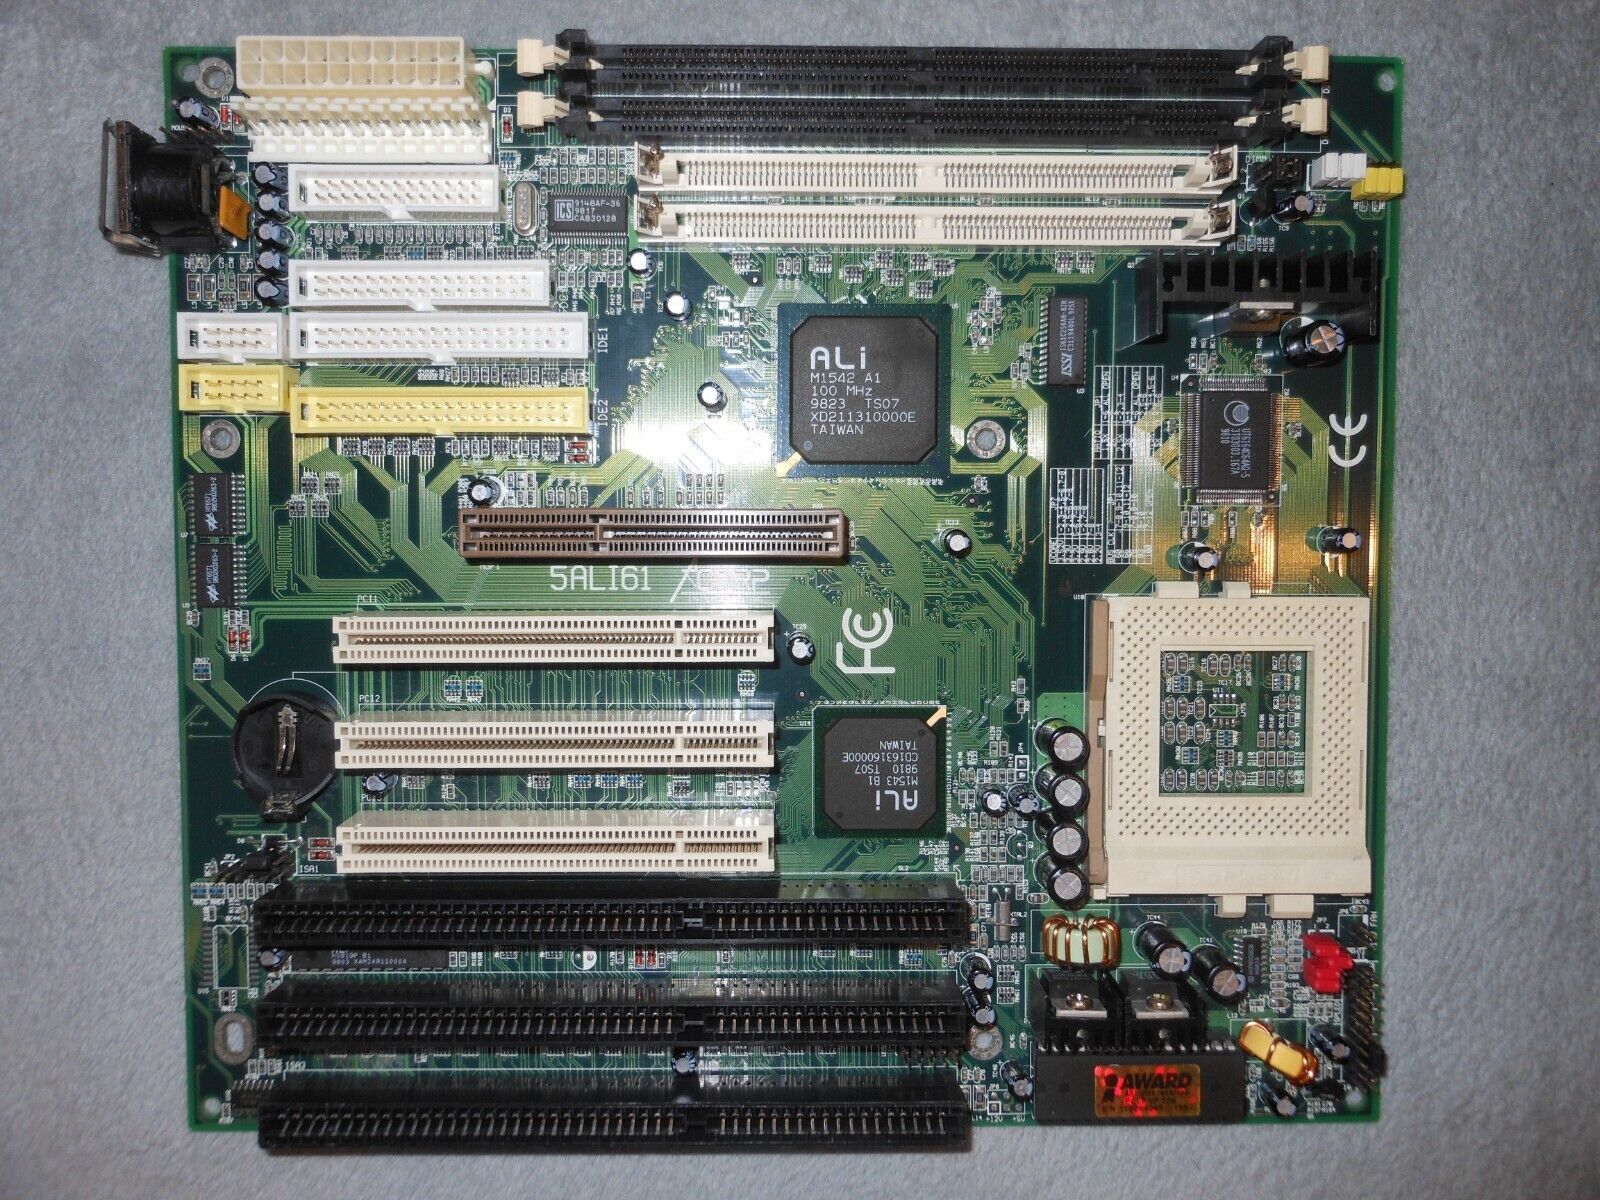 Acorp AGP-ALI motherboard 5ALI61 M1542 (ALADDiN V+) ISA PCI AGP Super Socket 7